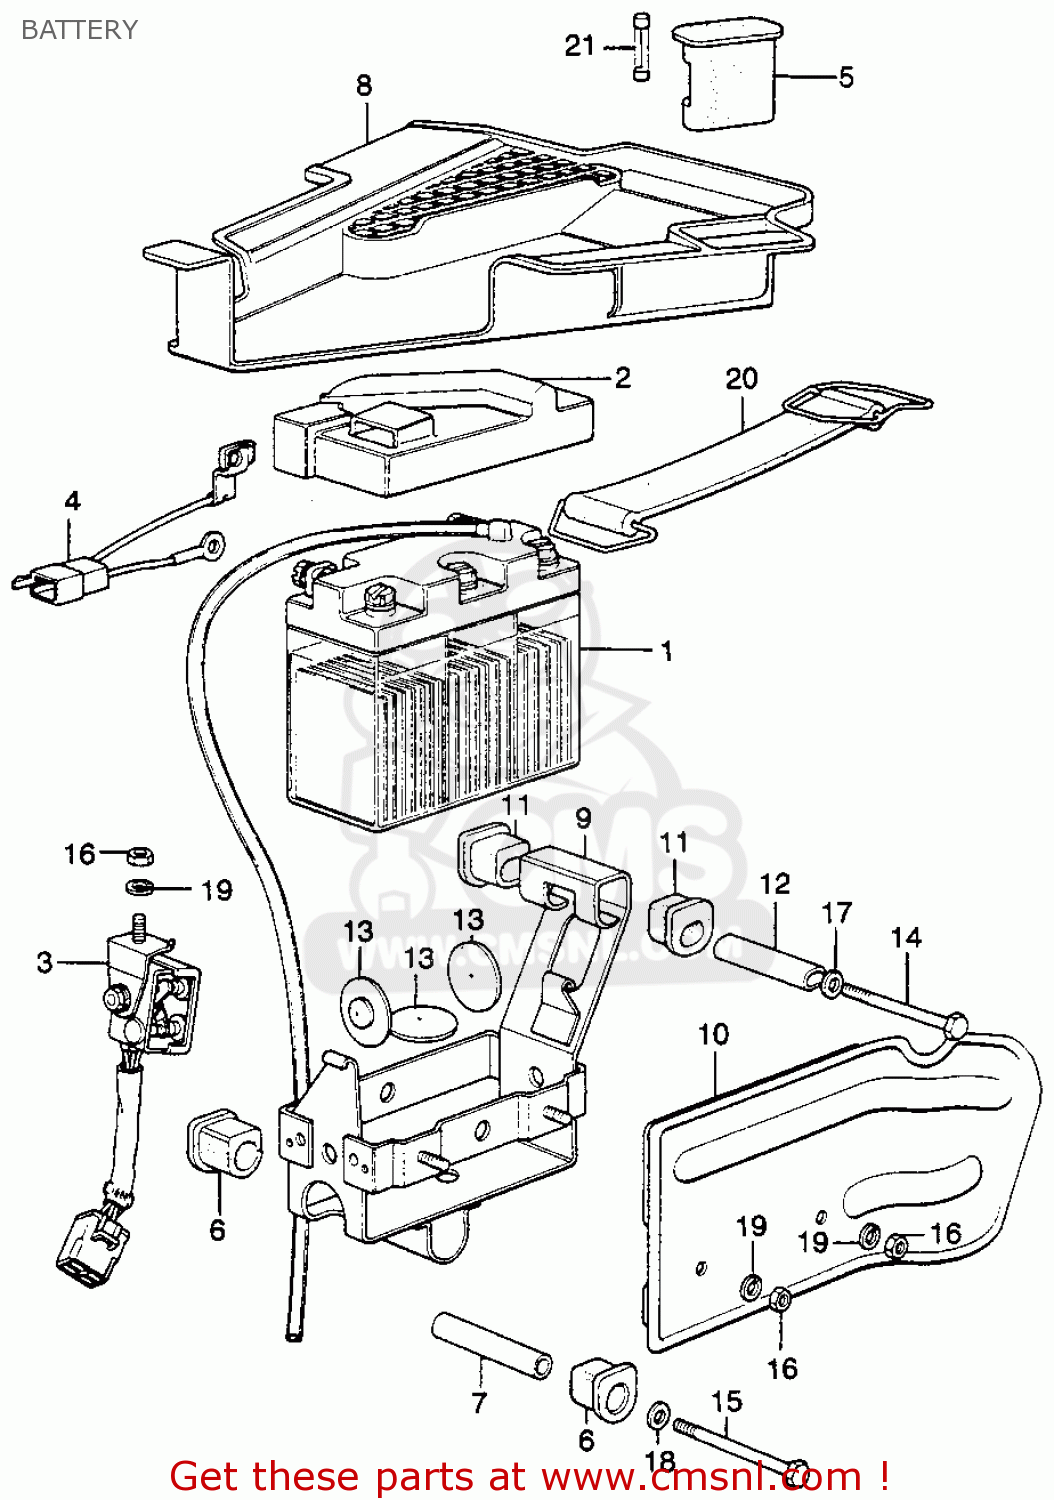 Honda Xl250 Motosport K0 1975 Usa Battery - schematic ...